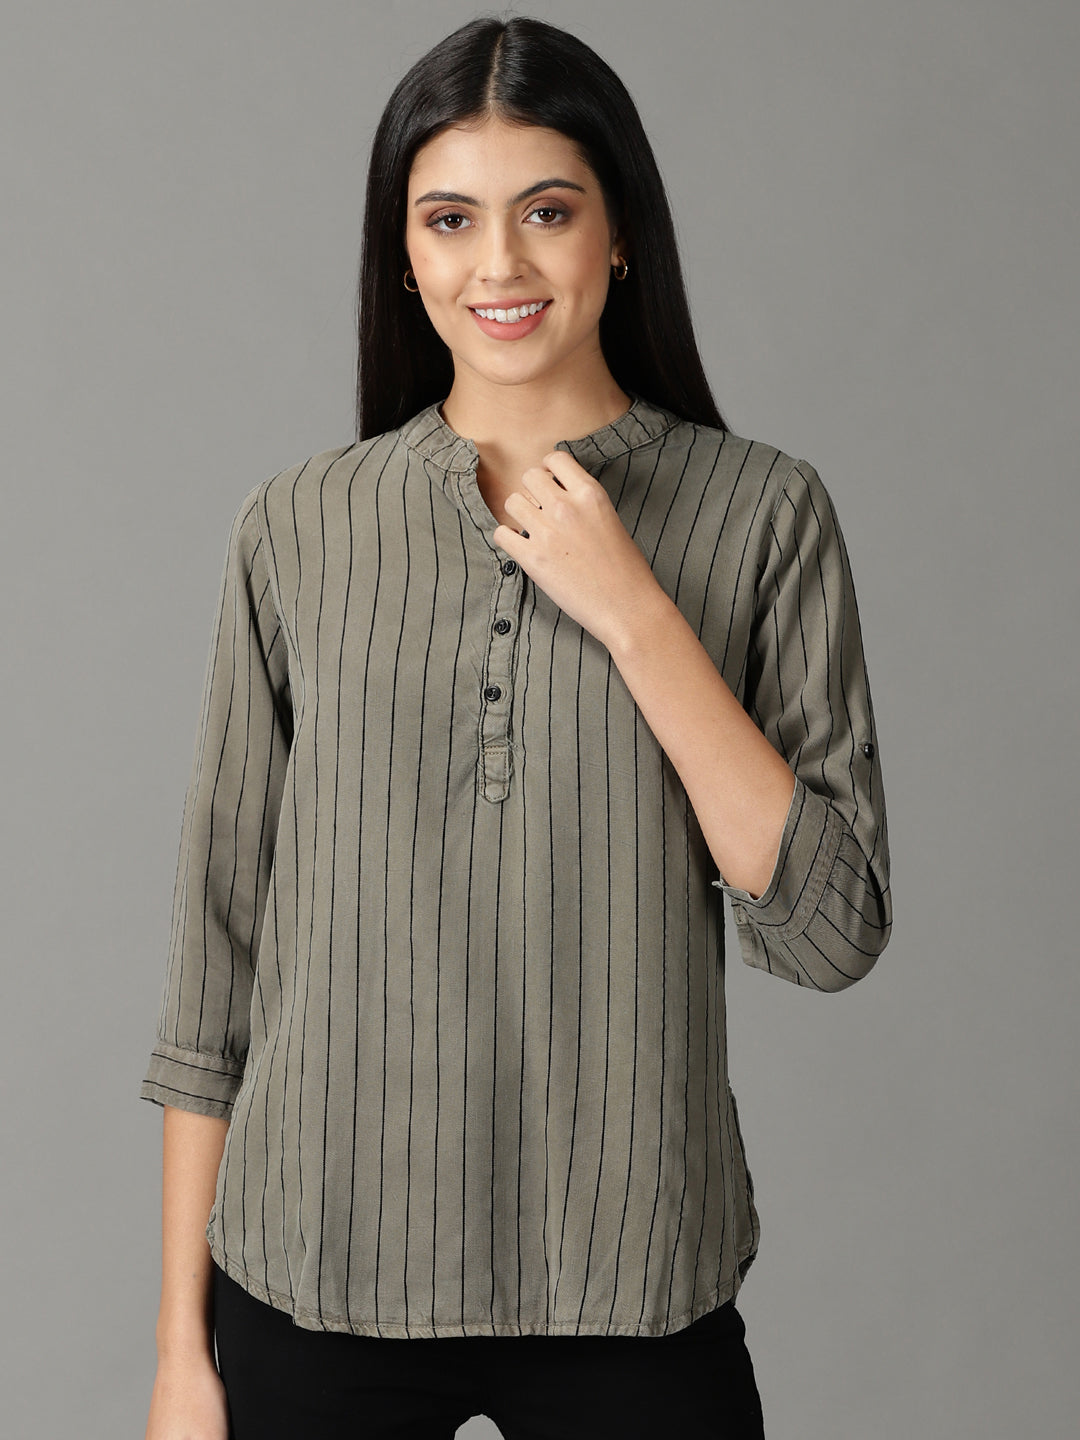 Women's Grey Striped Top